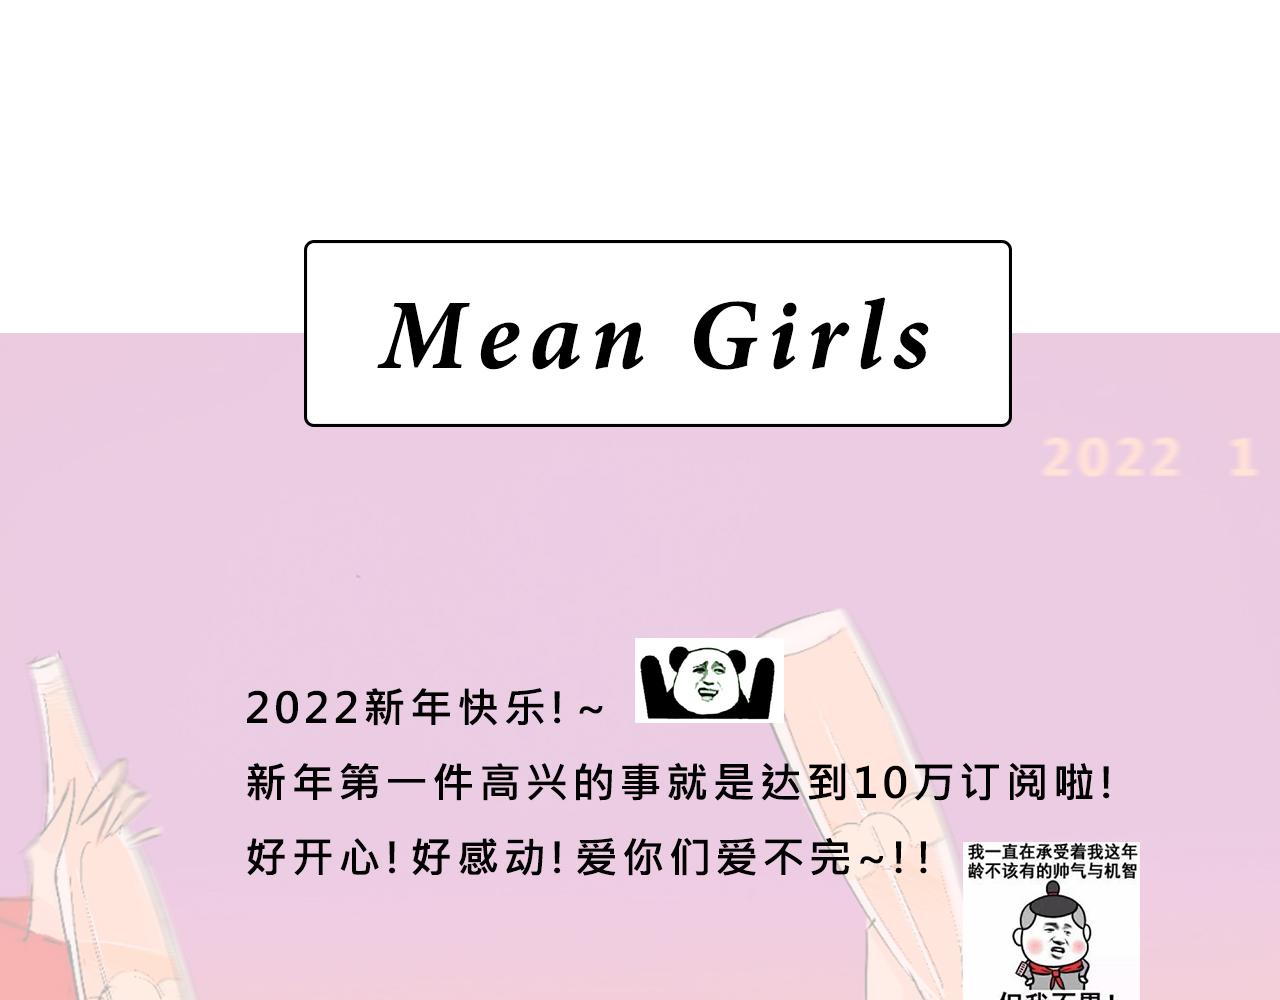 Mean girls茶裡茶氣 - 她們的新年傳統(2/2) - 1